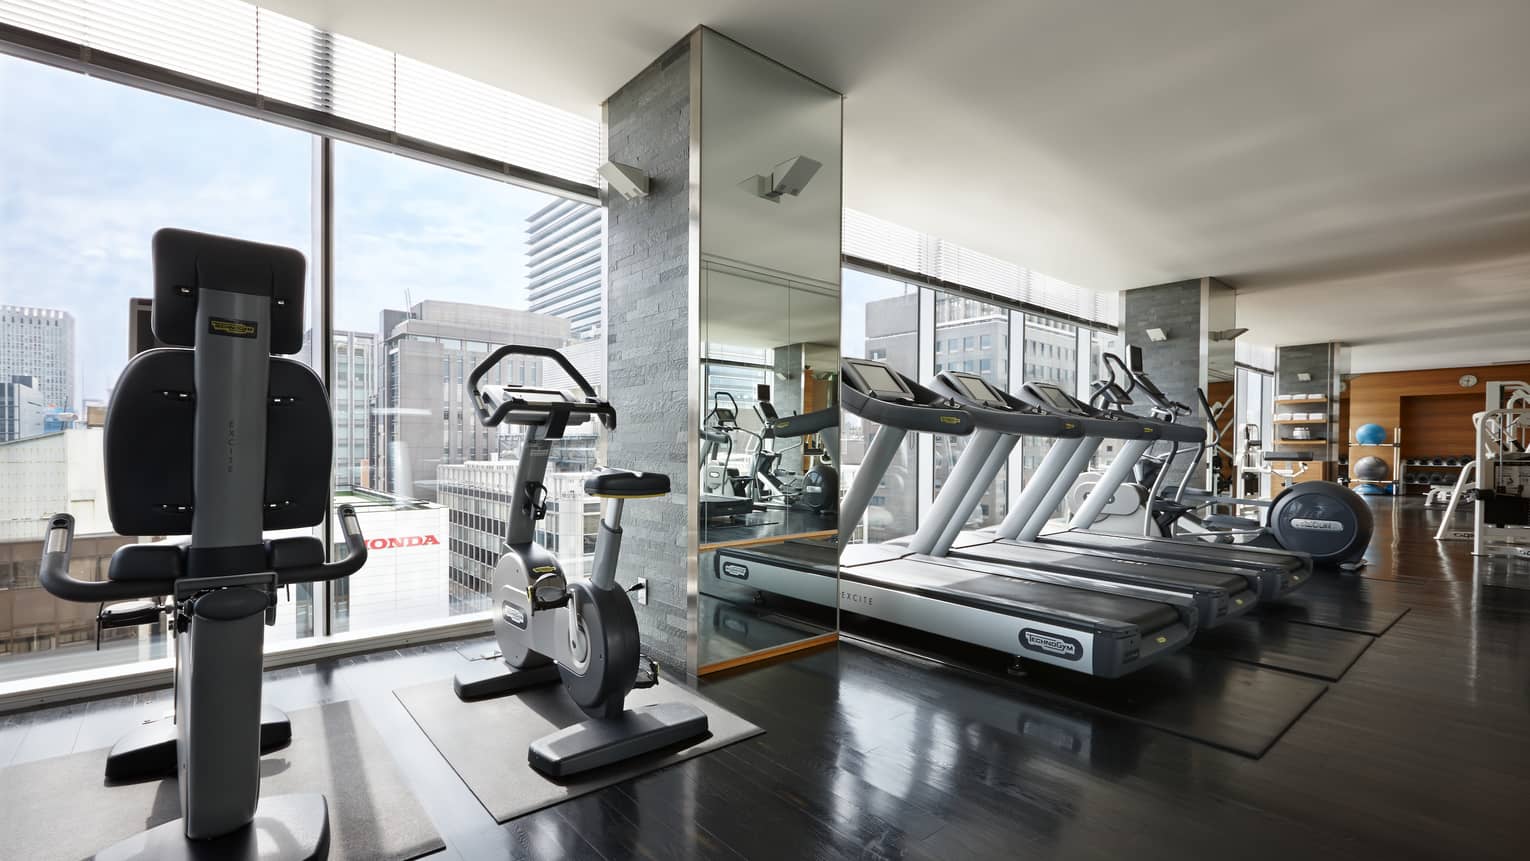 Elliptical machines, treadmills, cardio equipment by sunny window in Fitness Centre